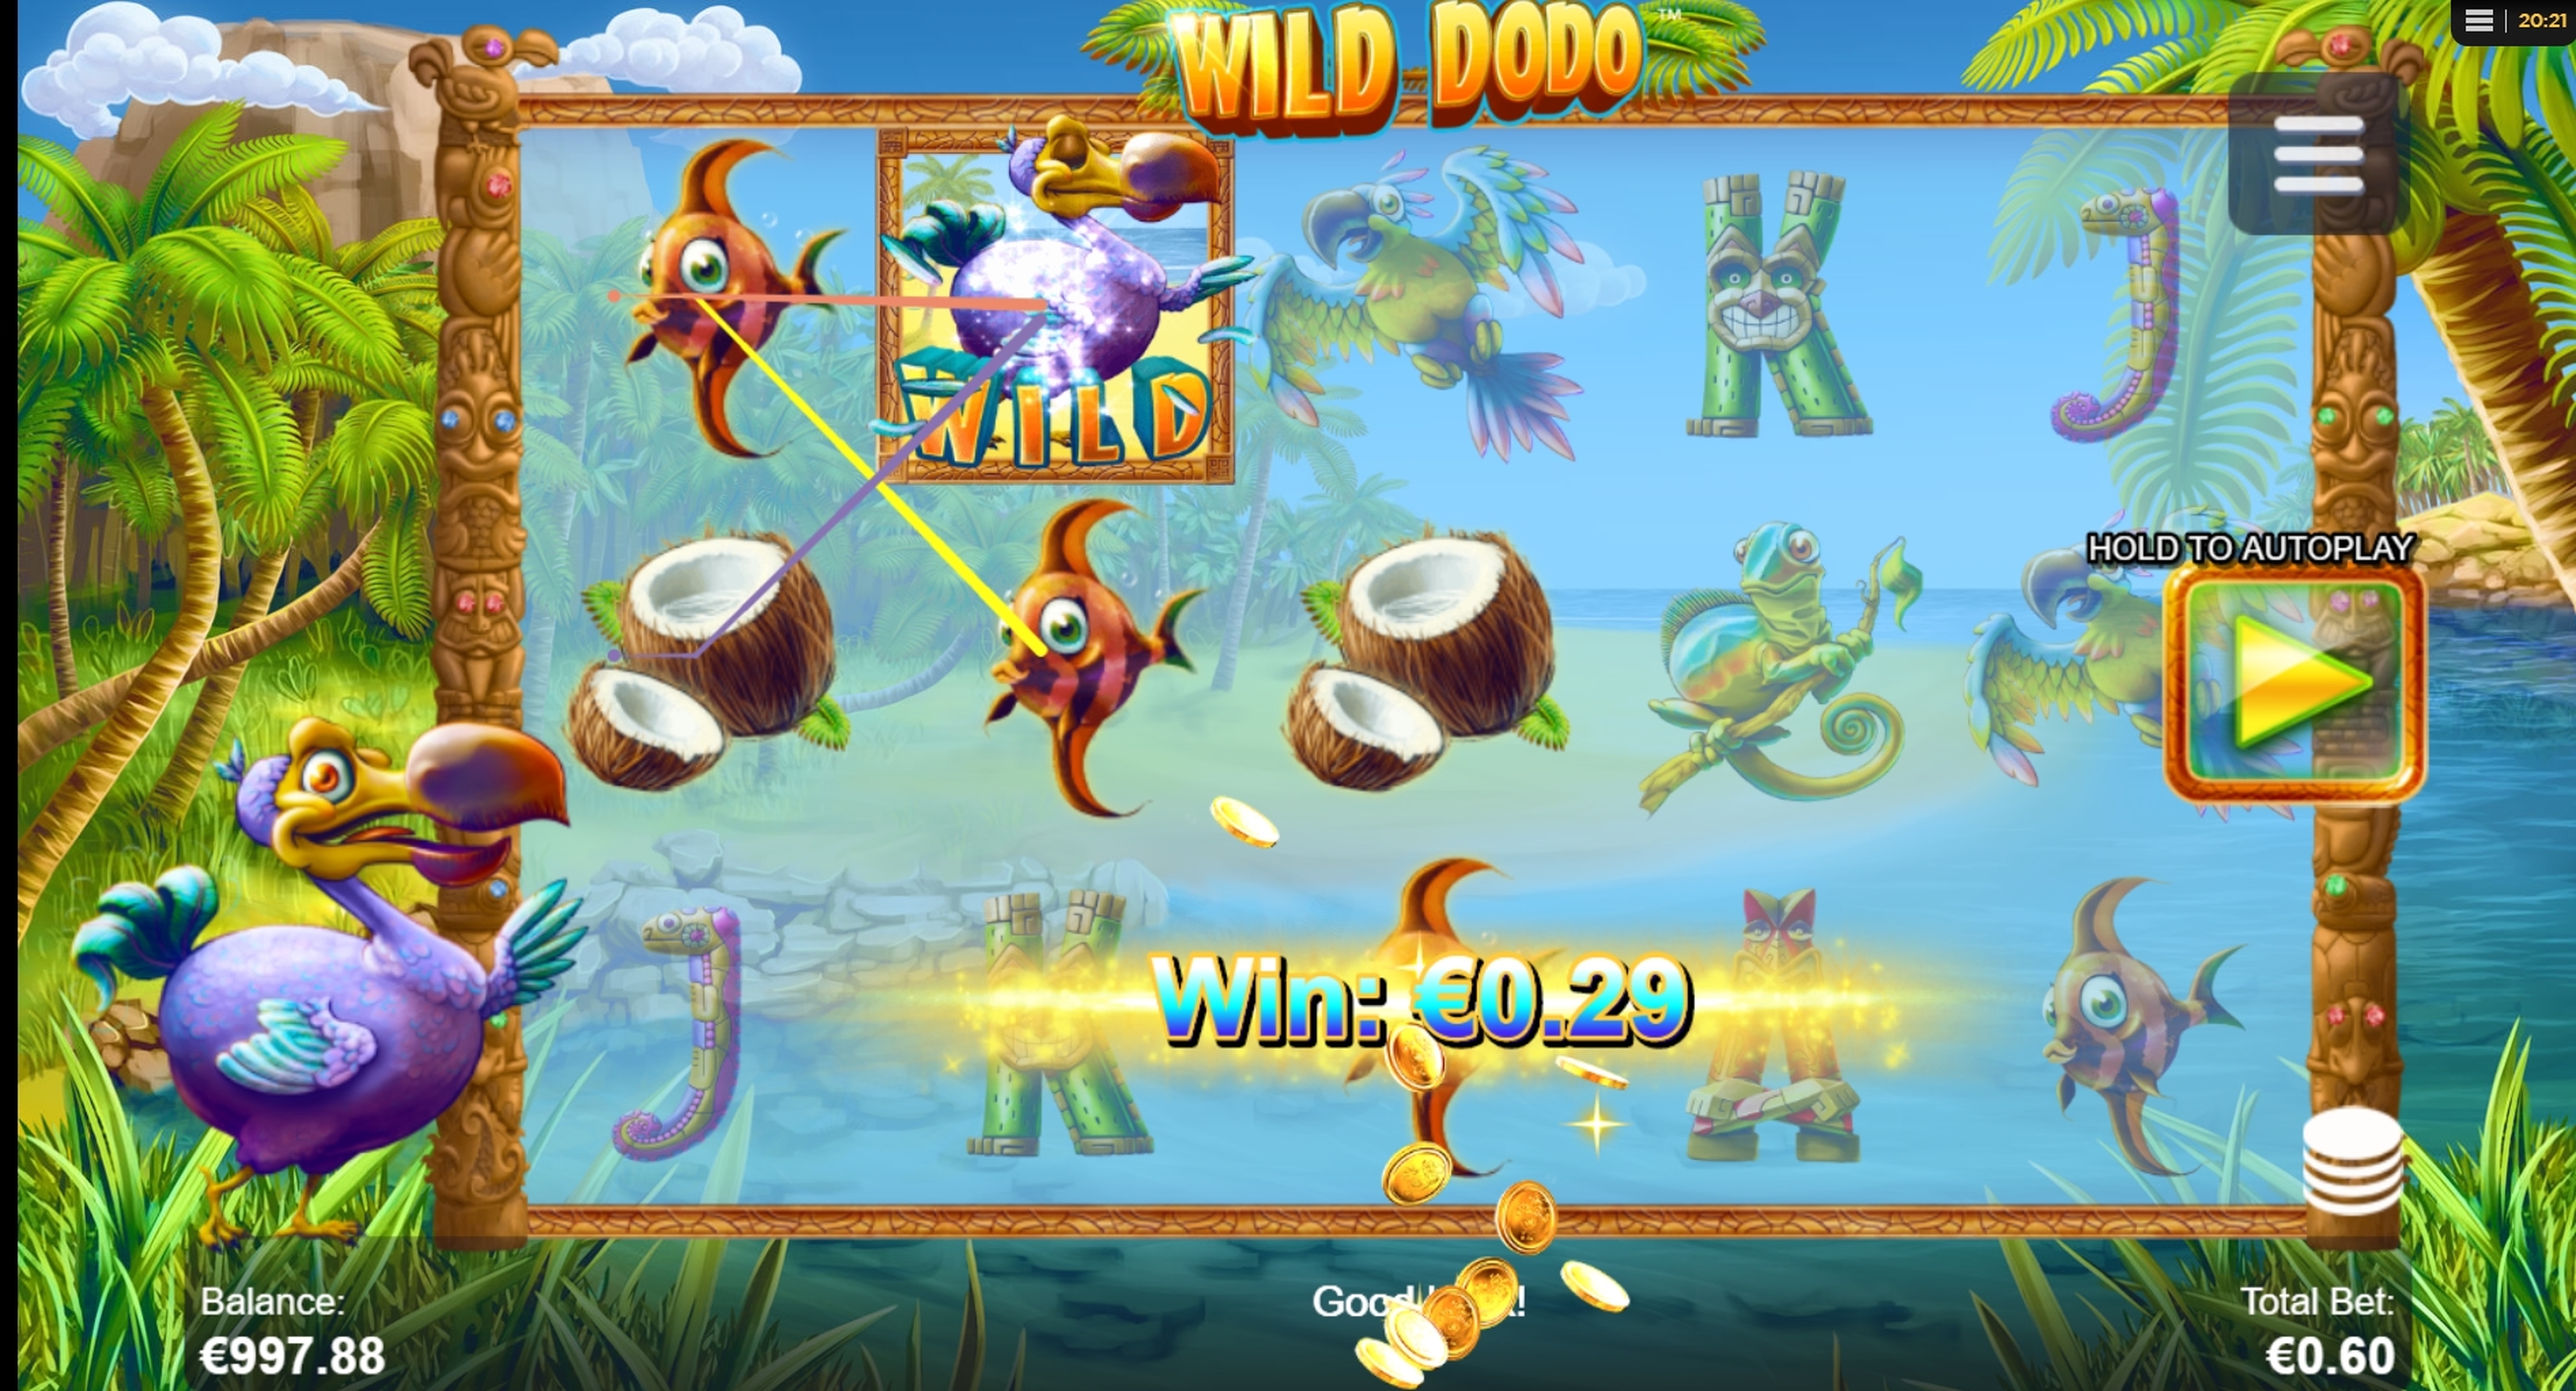 Win Money in Wild Dodo Free Slot Game by Side City Studios